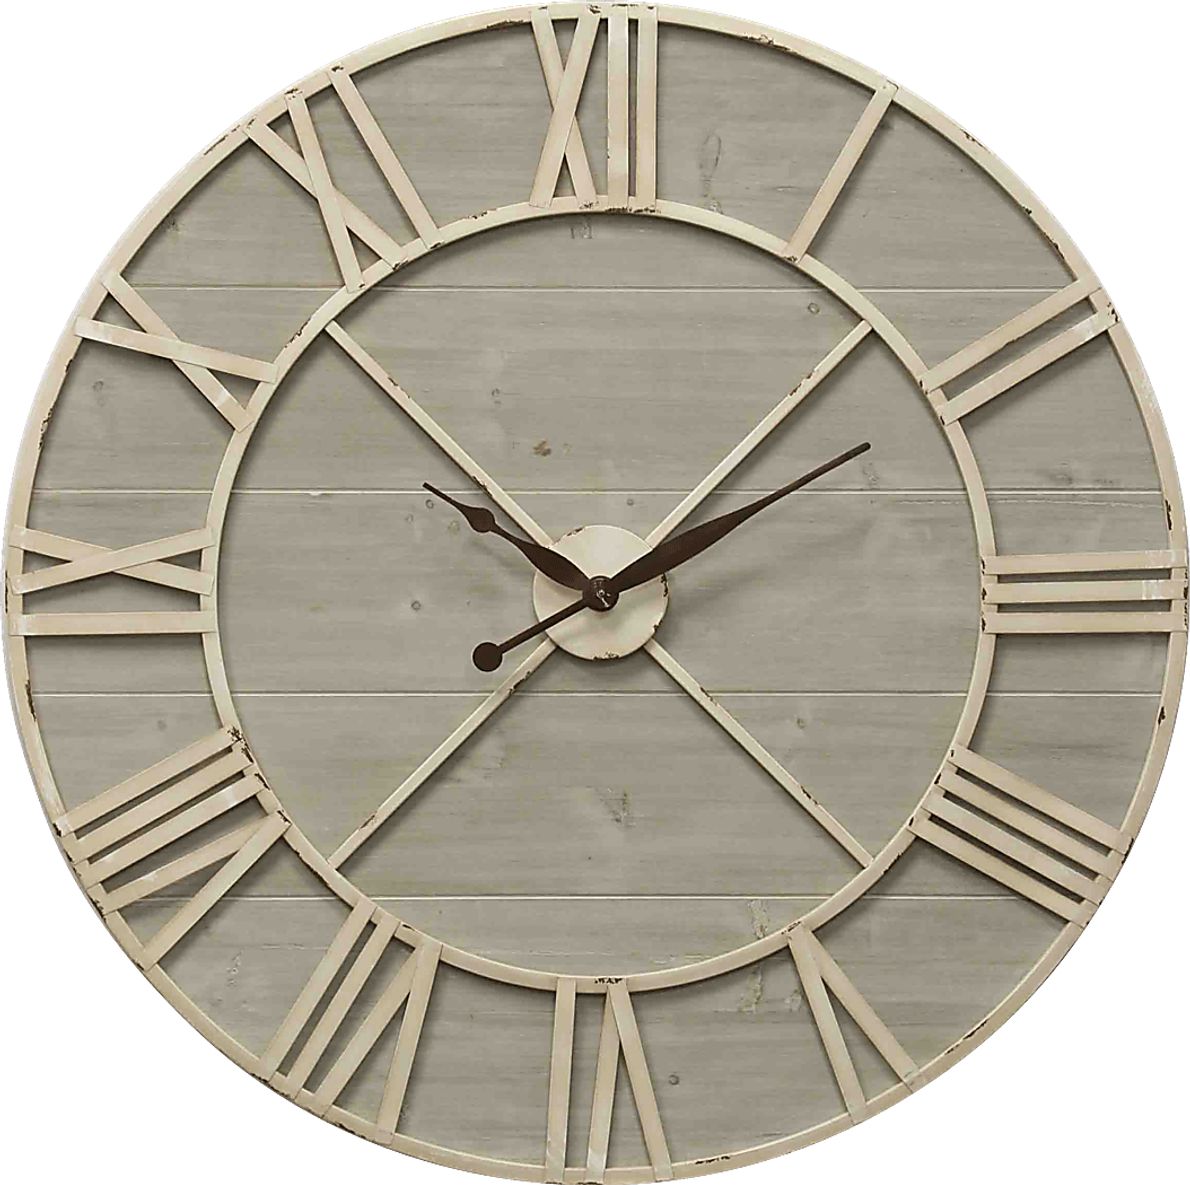 Addleston Ivory Wall Clock